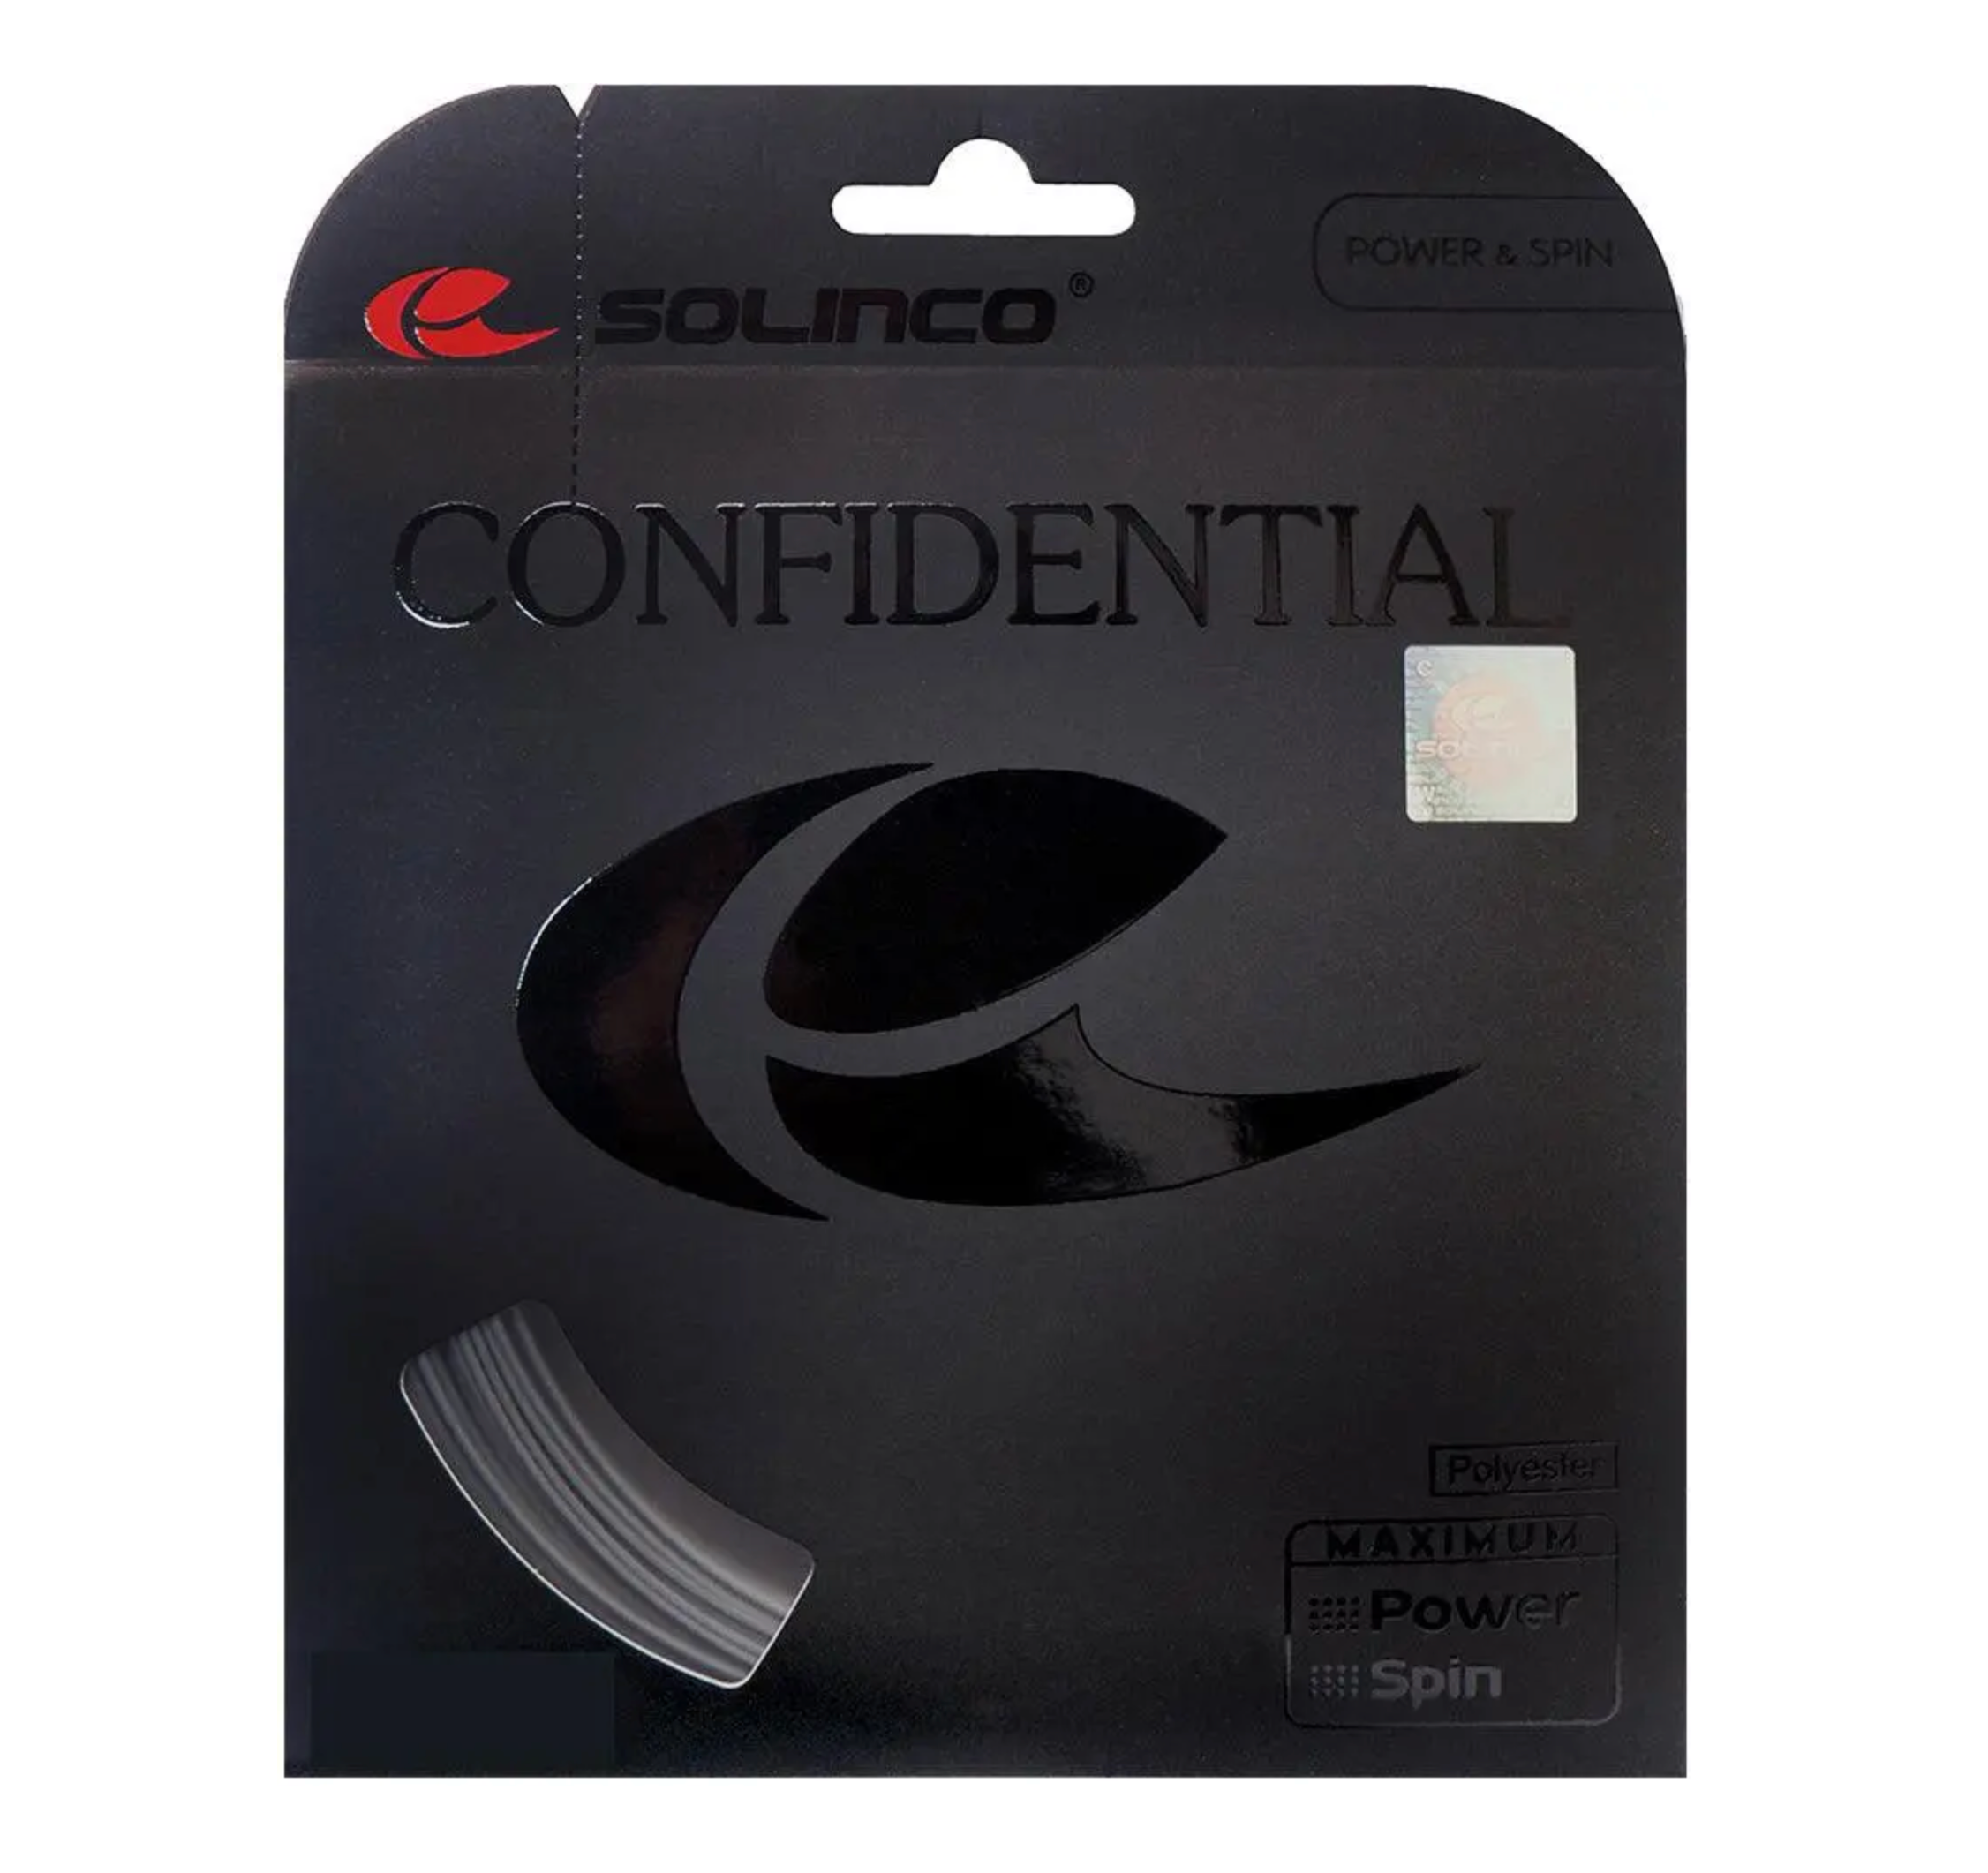 Original packaging of the Solinco Confidential 18 Tennis String Set